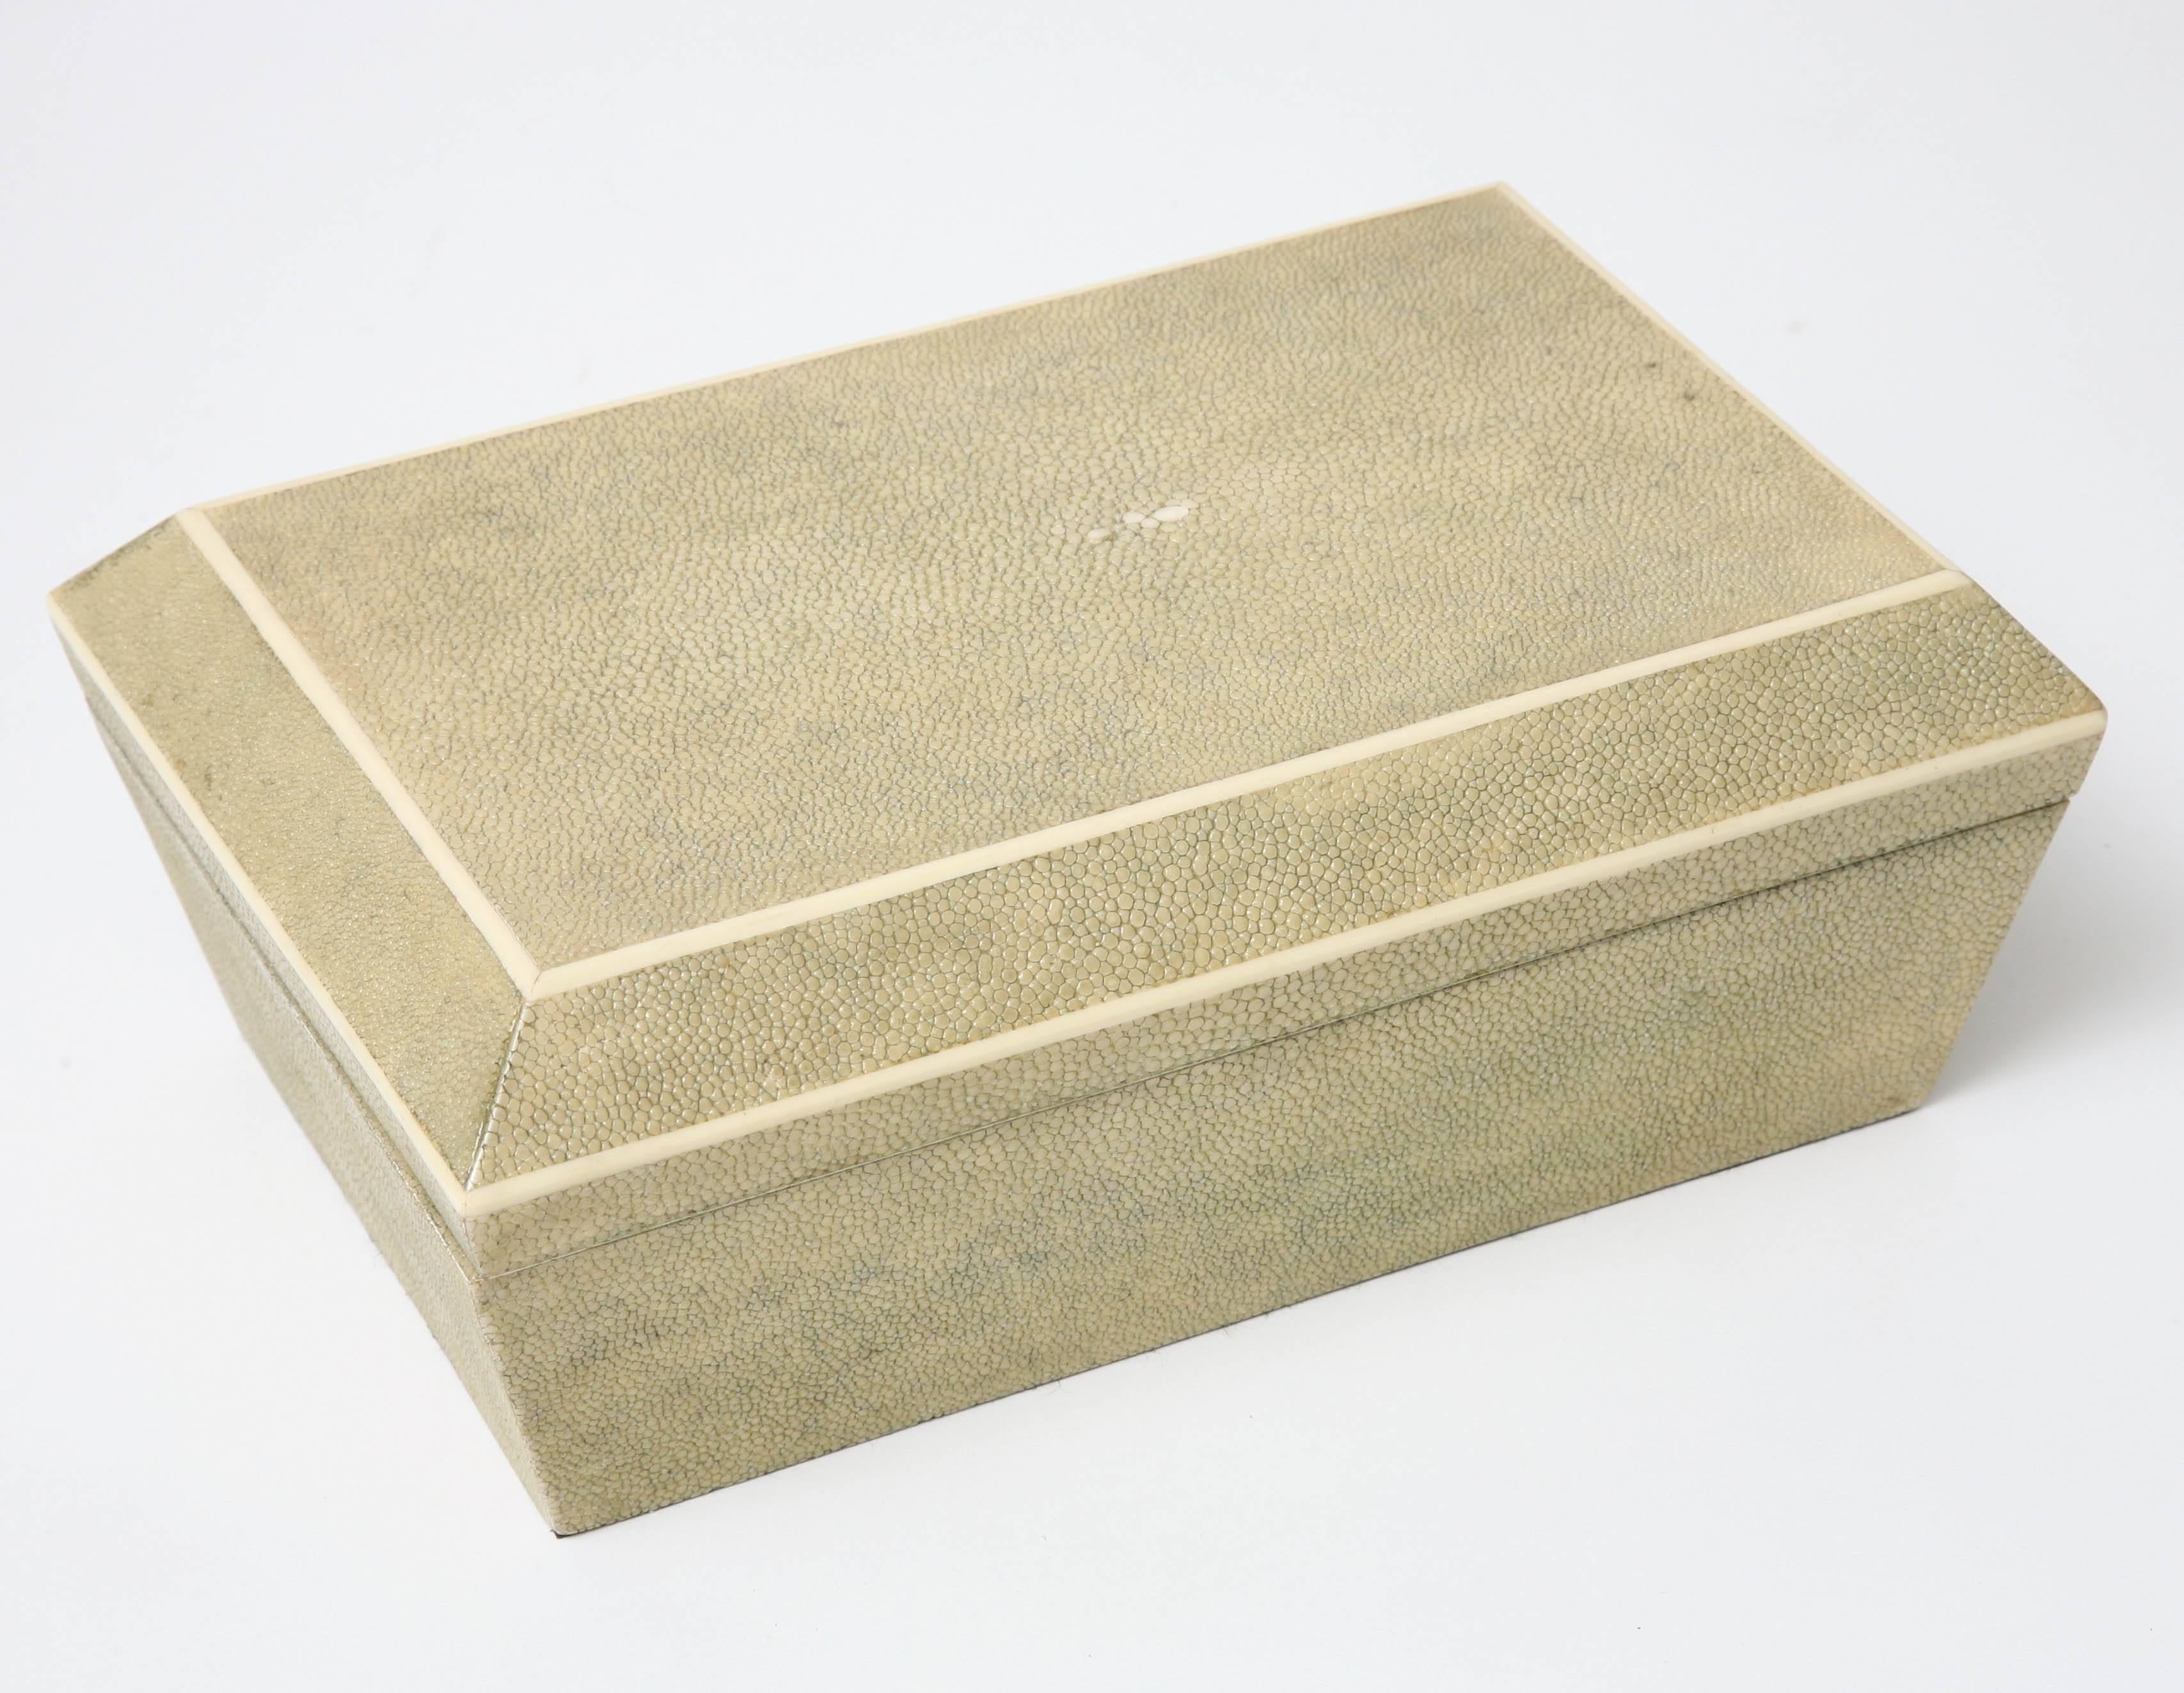 20th Century Rectangular, Art Deco Style, Light-Green Shagreen and Bone Box by R & Y Augousti